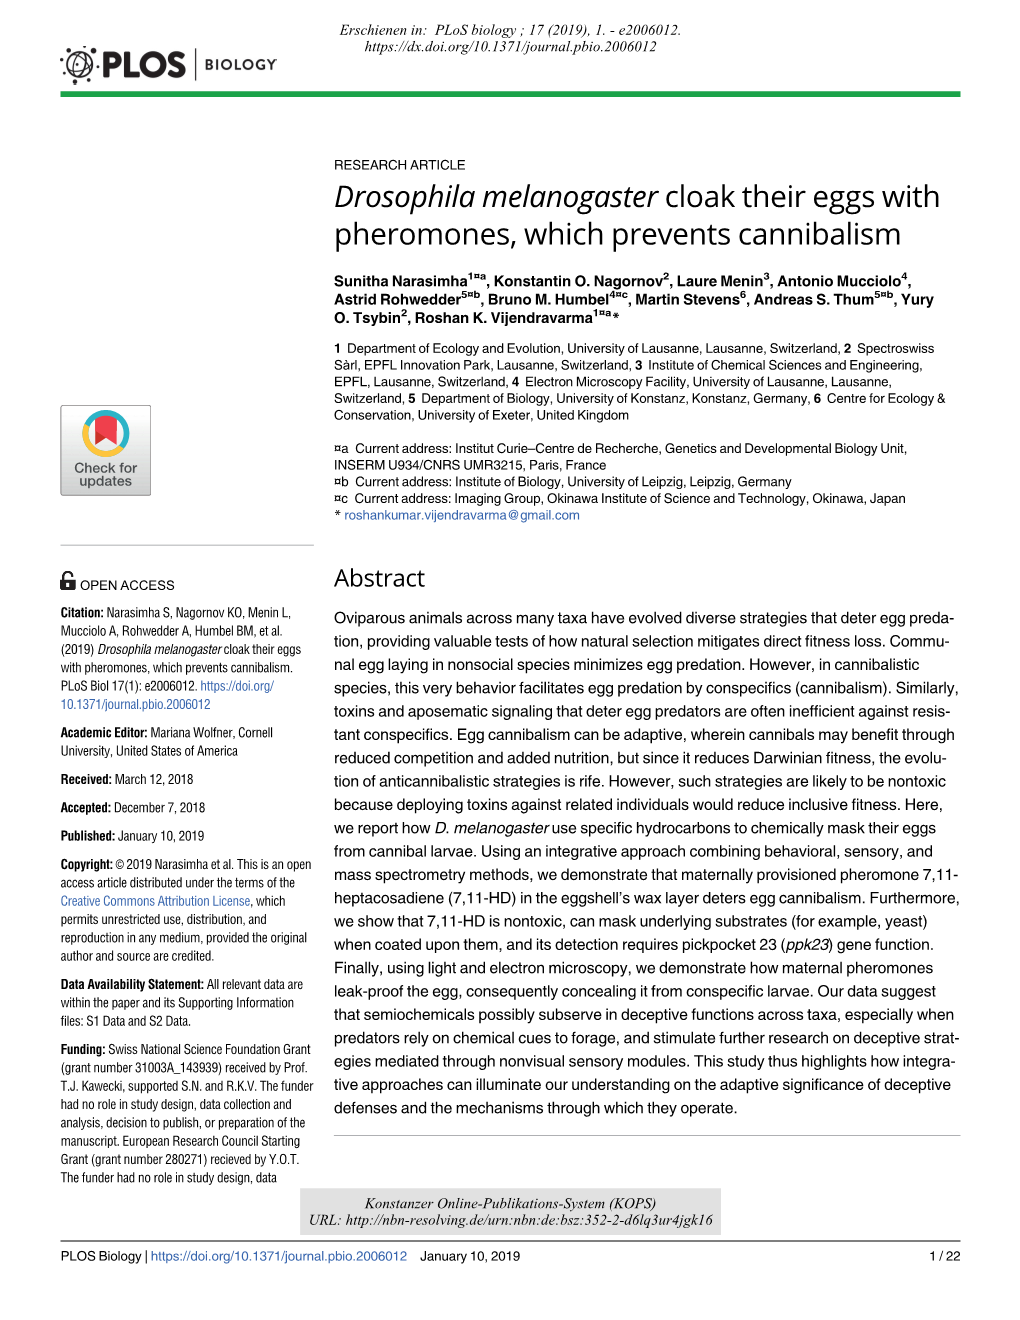 Drosophila Melanogaster Cloak Their Eggs with Pheromones, Which Prevents Cannibalism